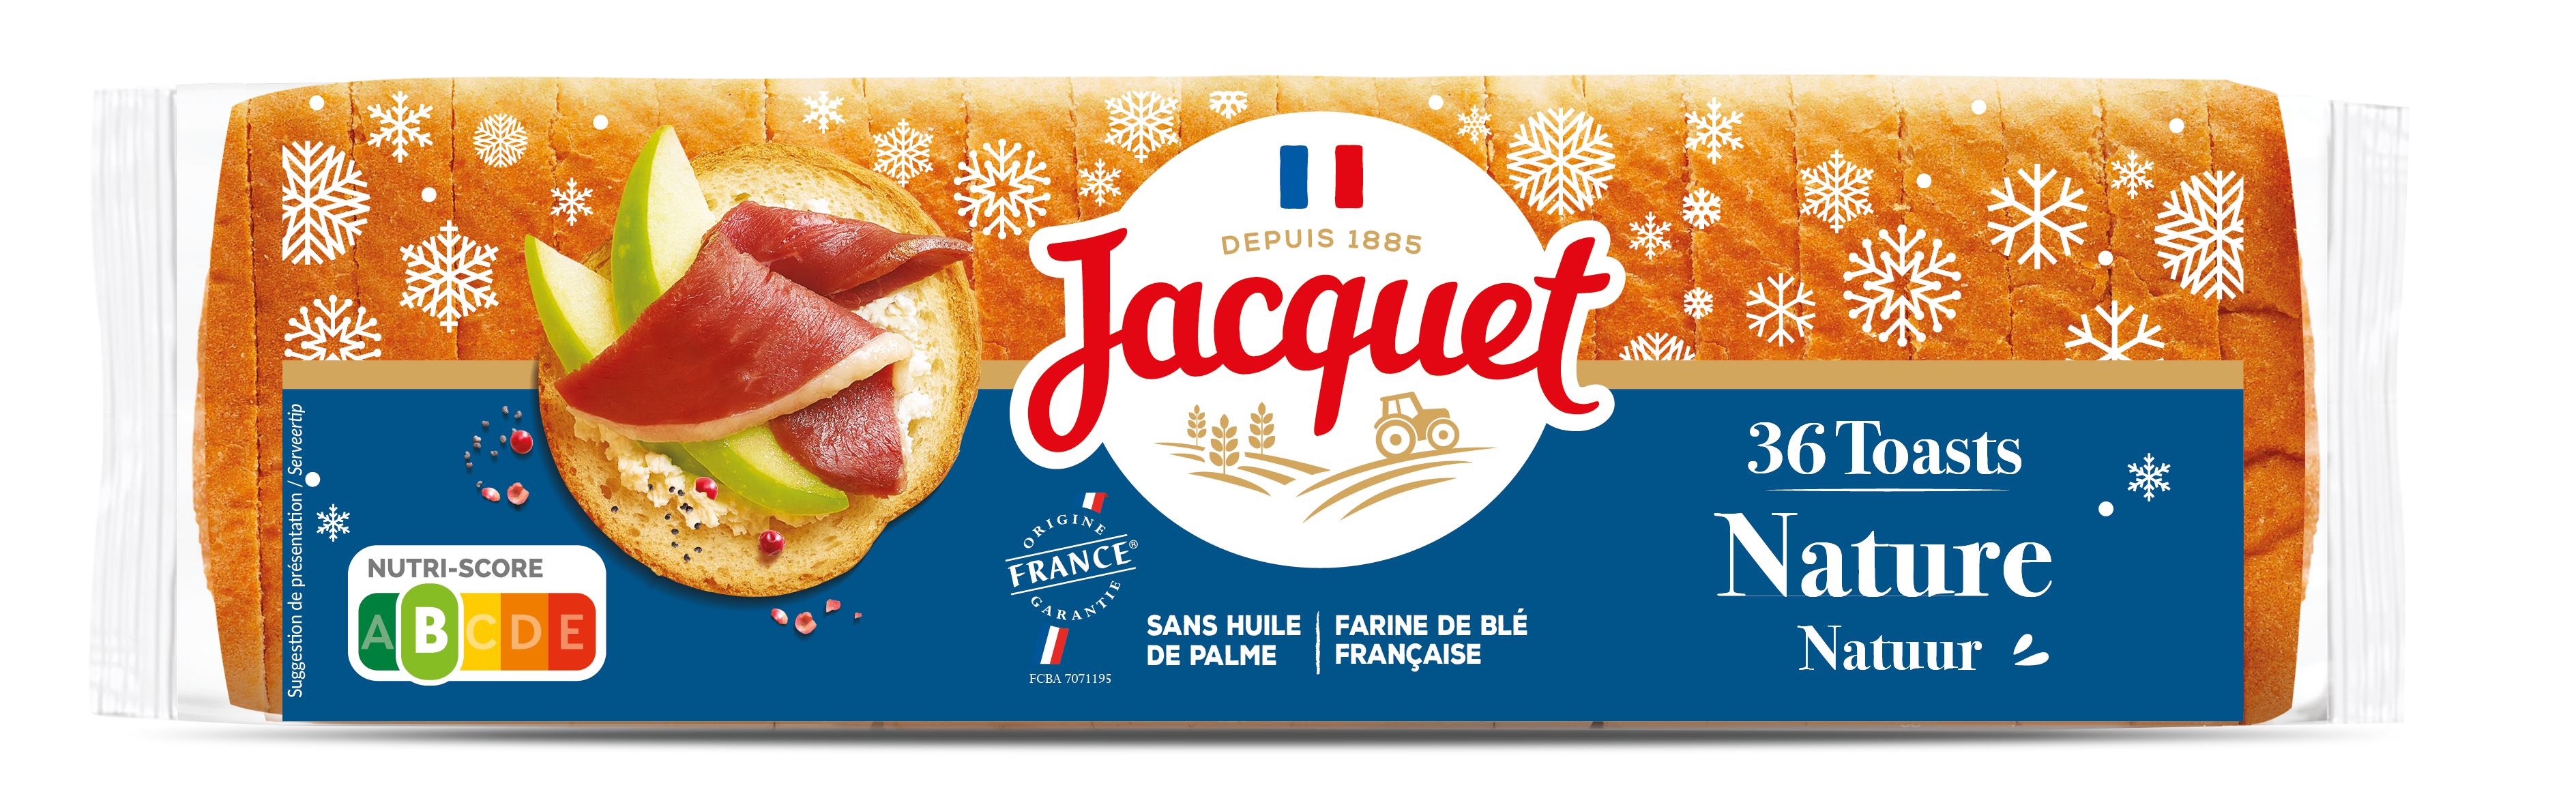 Pain Toast - 36 Toasts Ronds Nature - Pains Jacquet